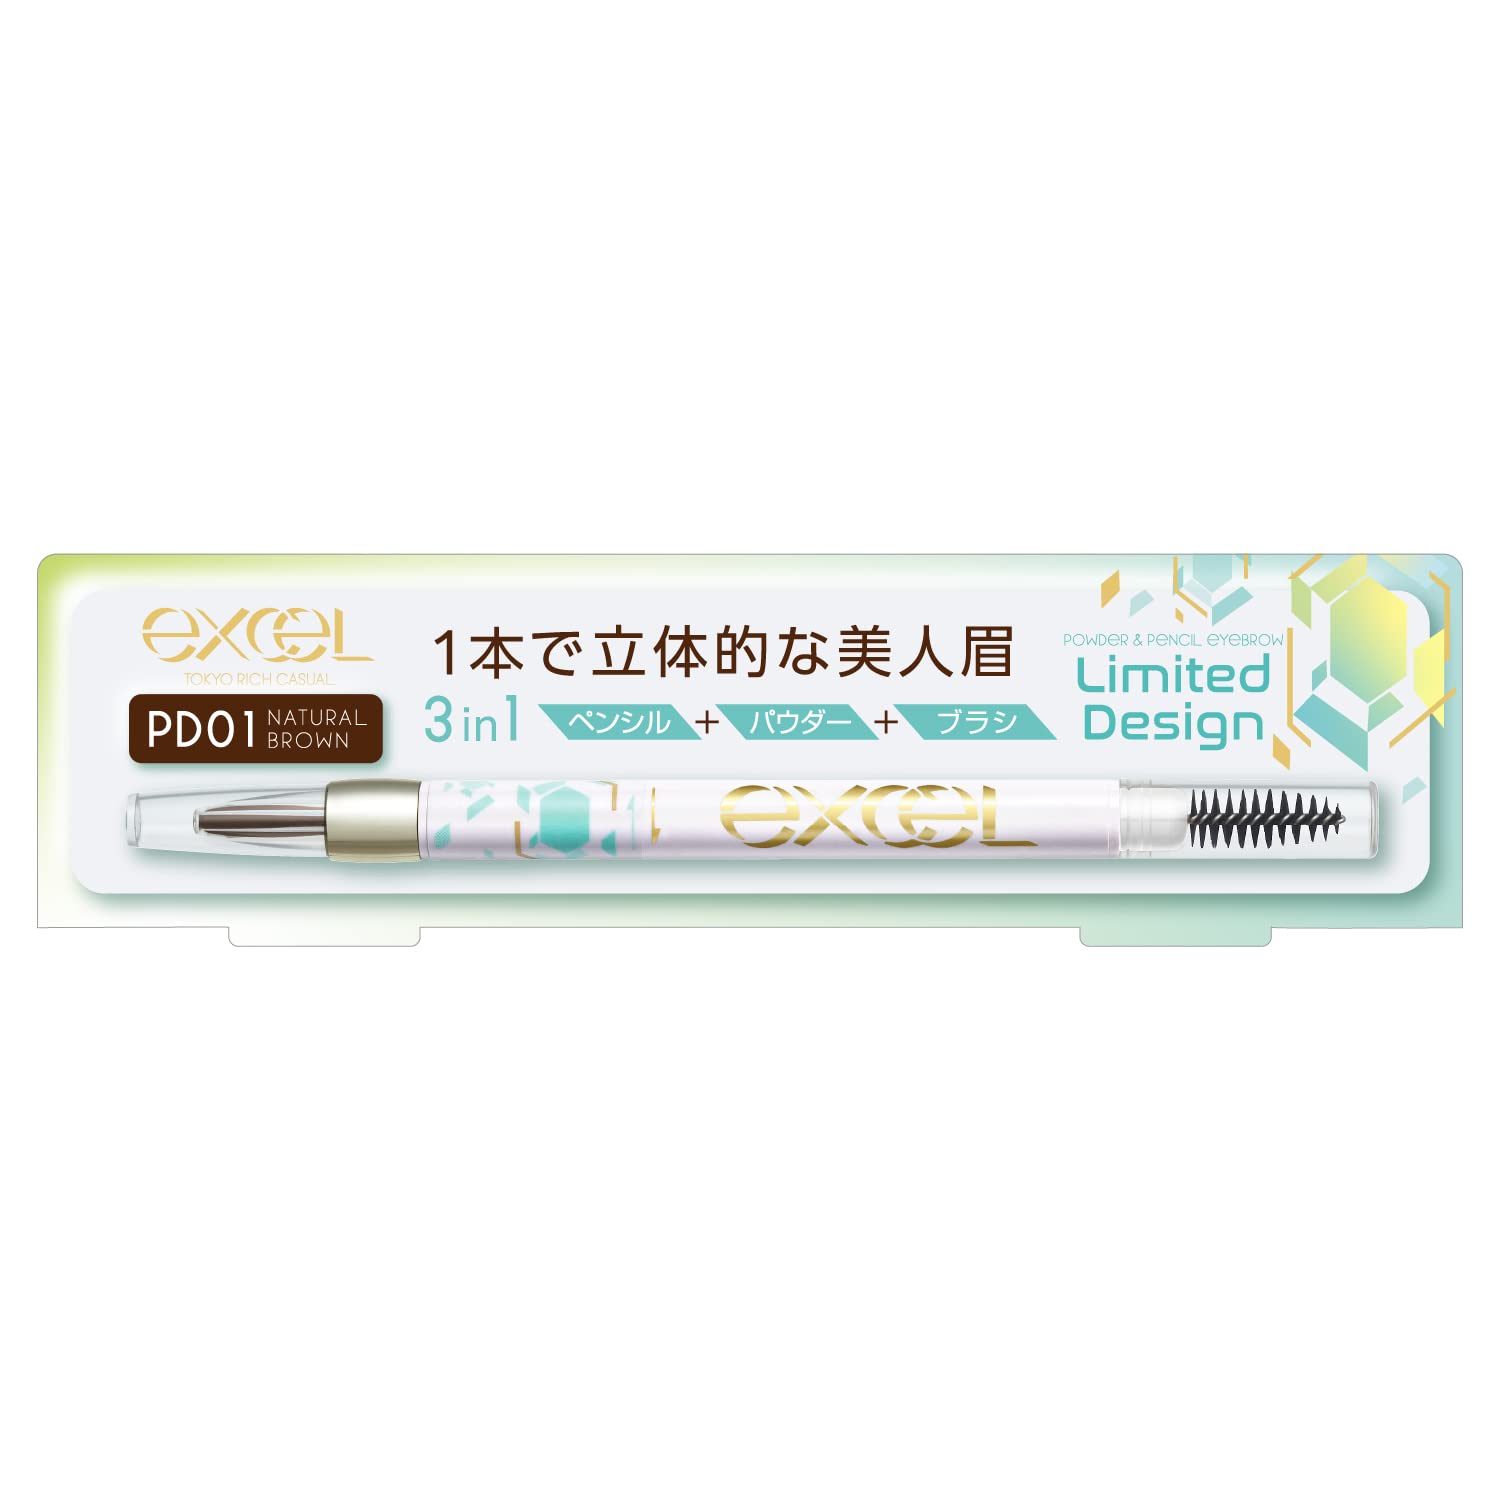 Flowfushi Japan Uzu Eye Opening Liner Brown Black Liquid Eyeliner Alcohol Free Dye Free Hypoallergenic